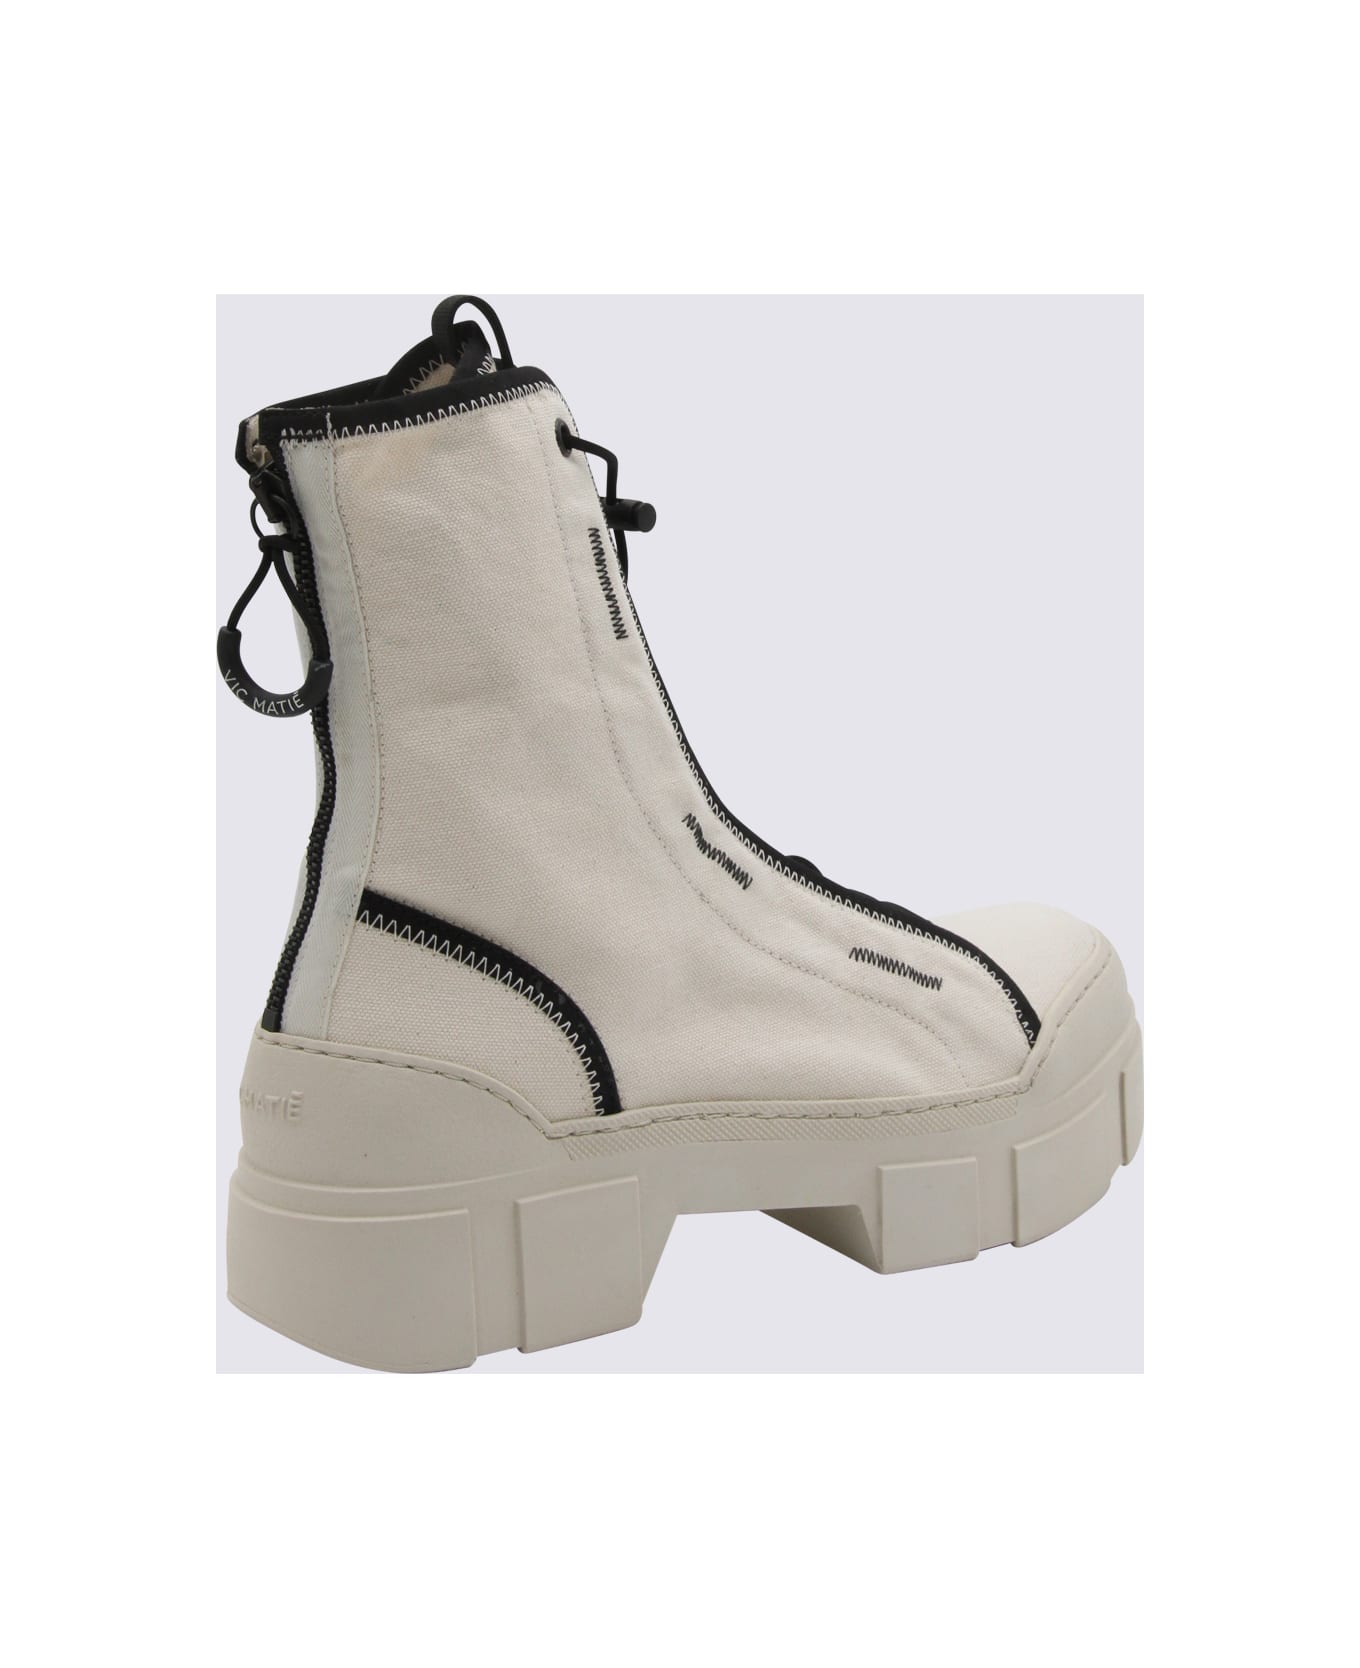 Vic Matié Cream And Black Canvas Combat Boots - Osso ブーツ